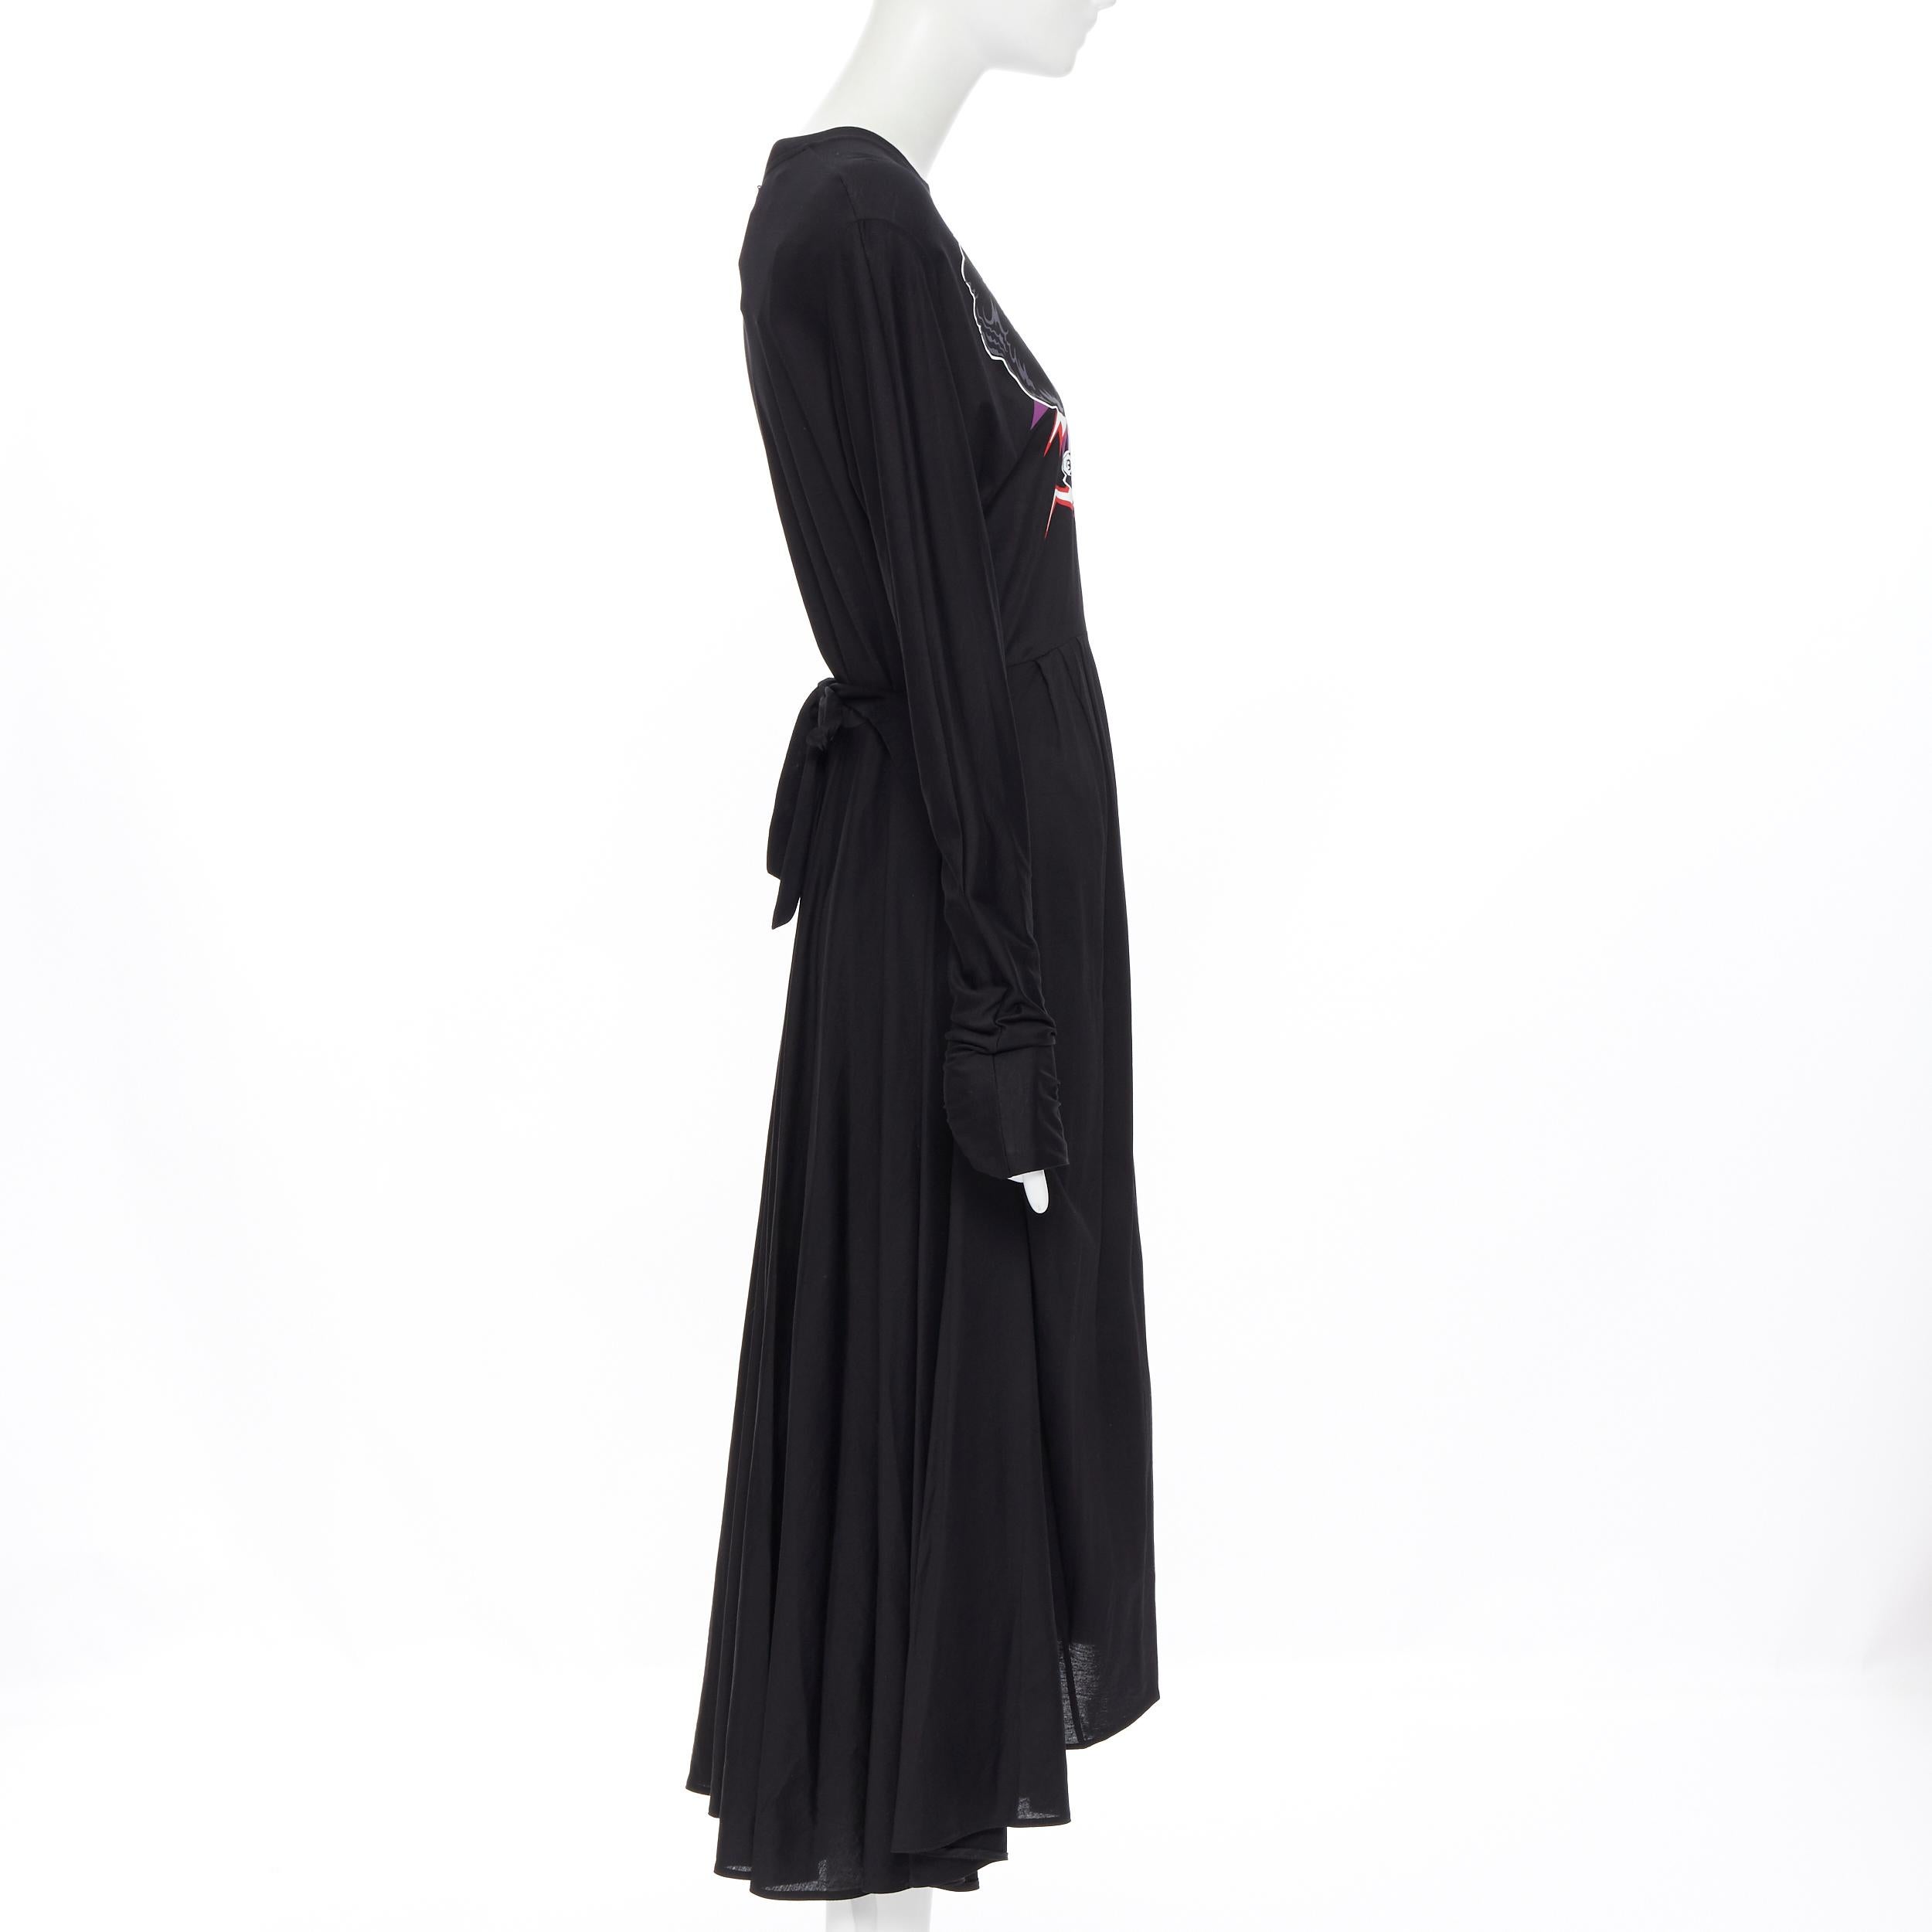 Black new PRADA 2019 Runway Frankenstein Couple black cotton layered skirt dress L